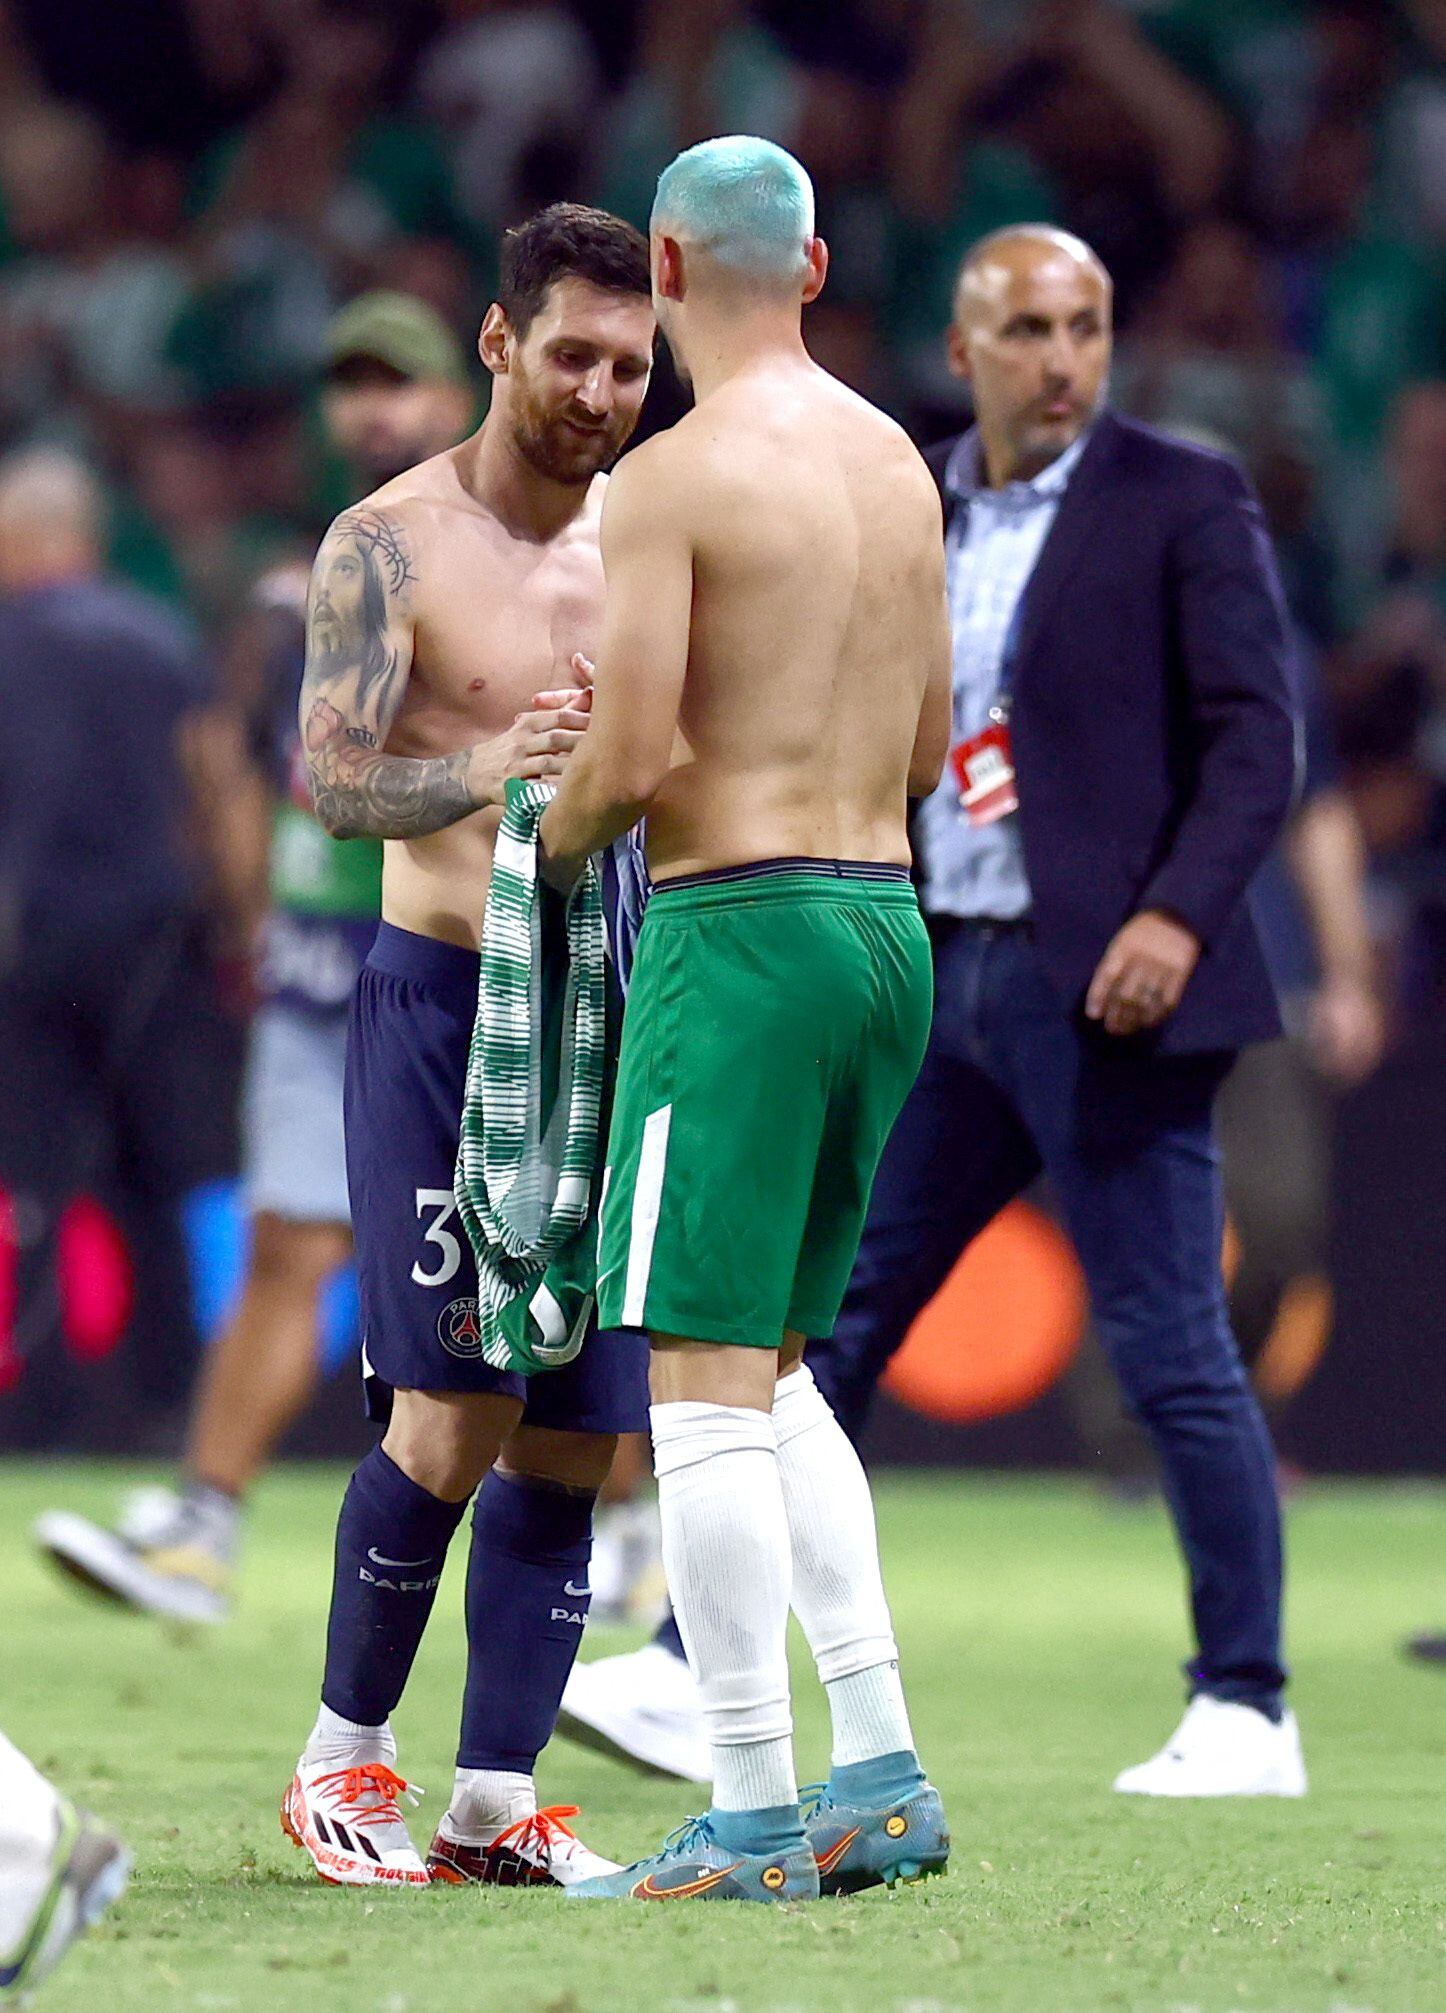 Lionel Messi cambió la camiseta al término del partido con Omer Atzili, el futbolista del Maccabi Haifa (REUTERS/Ronen Zvulun)